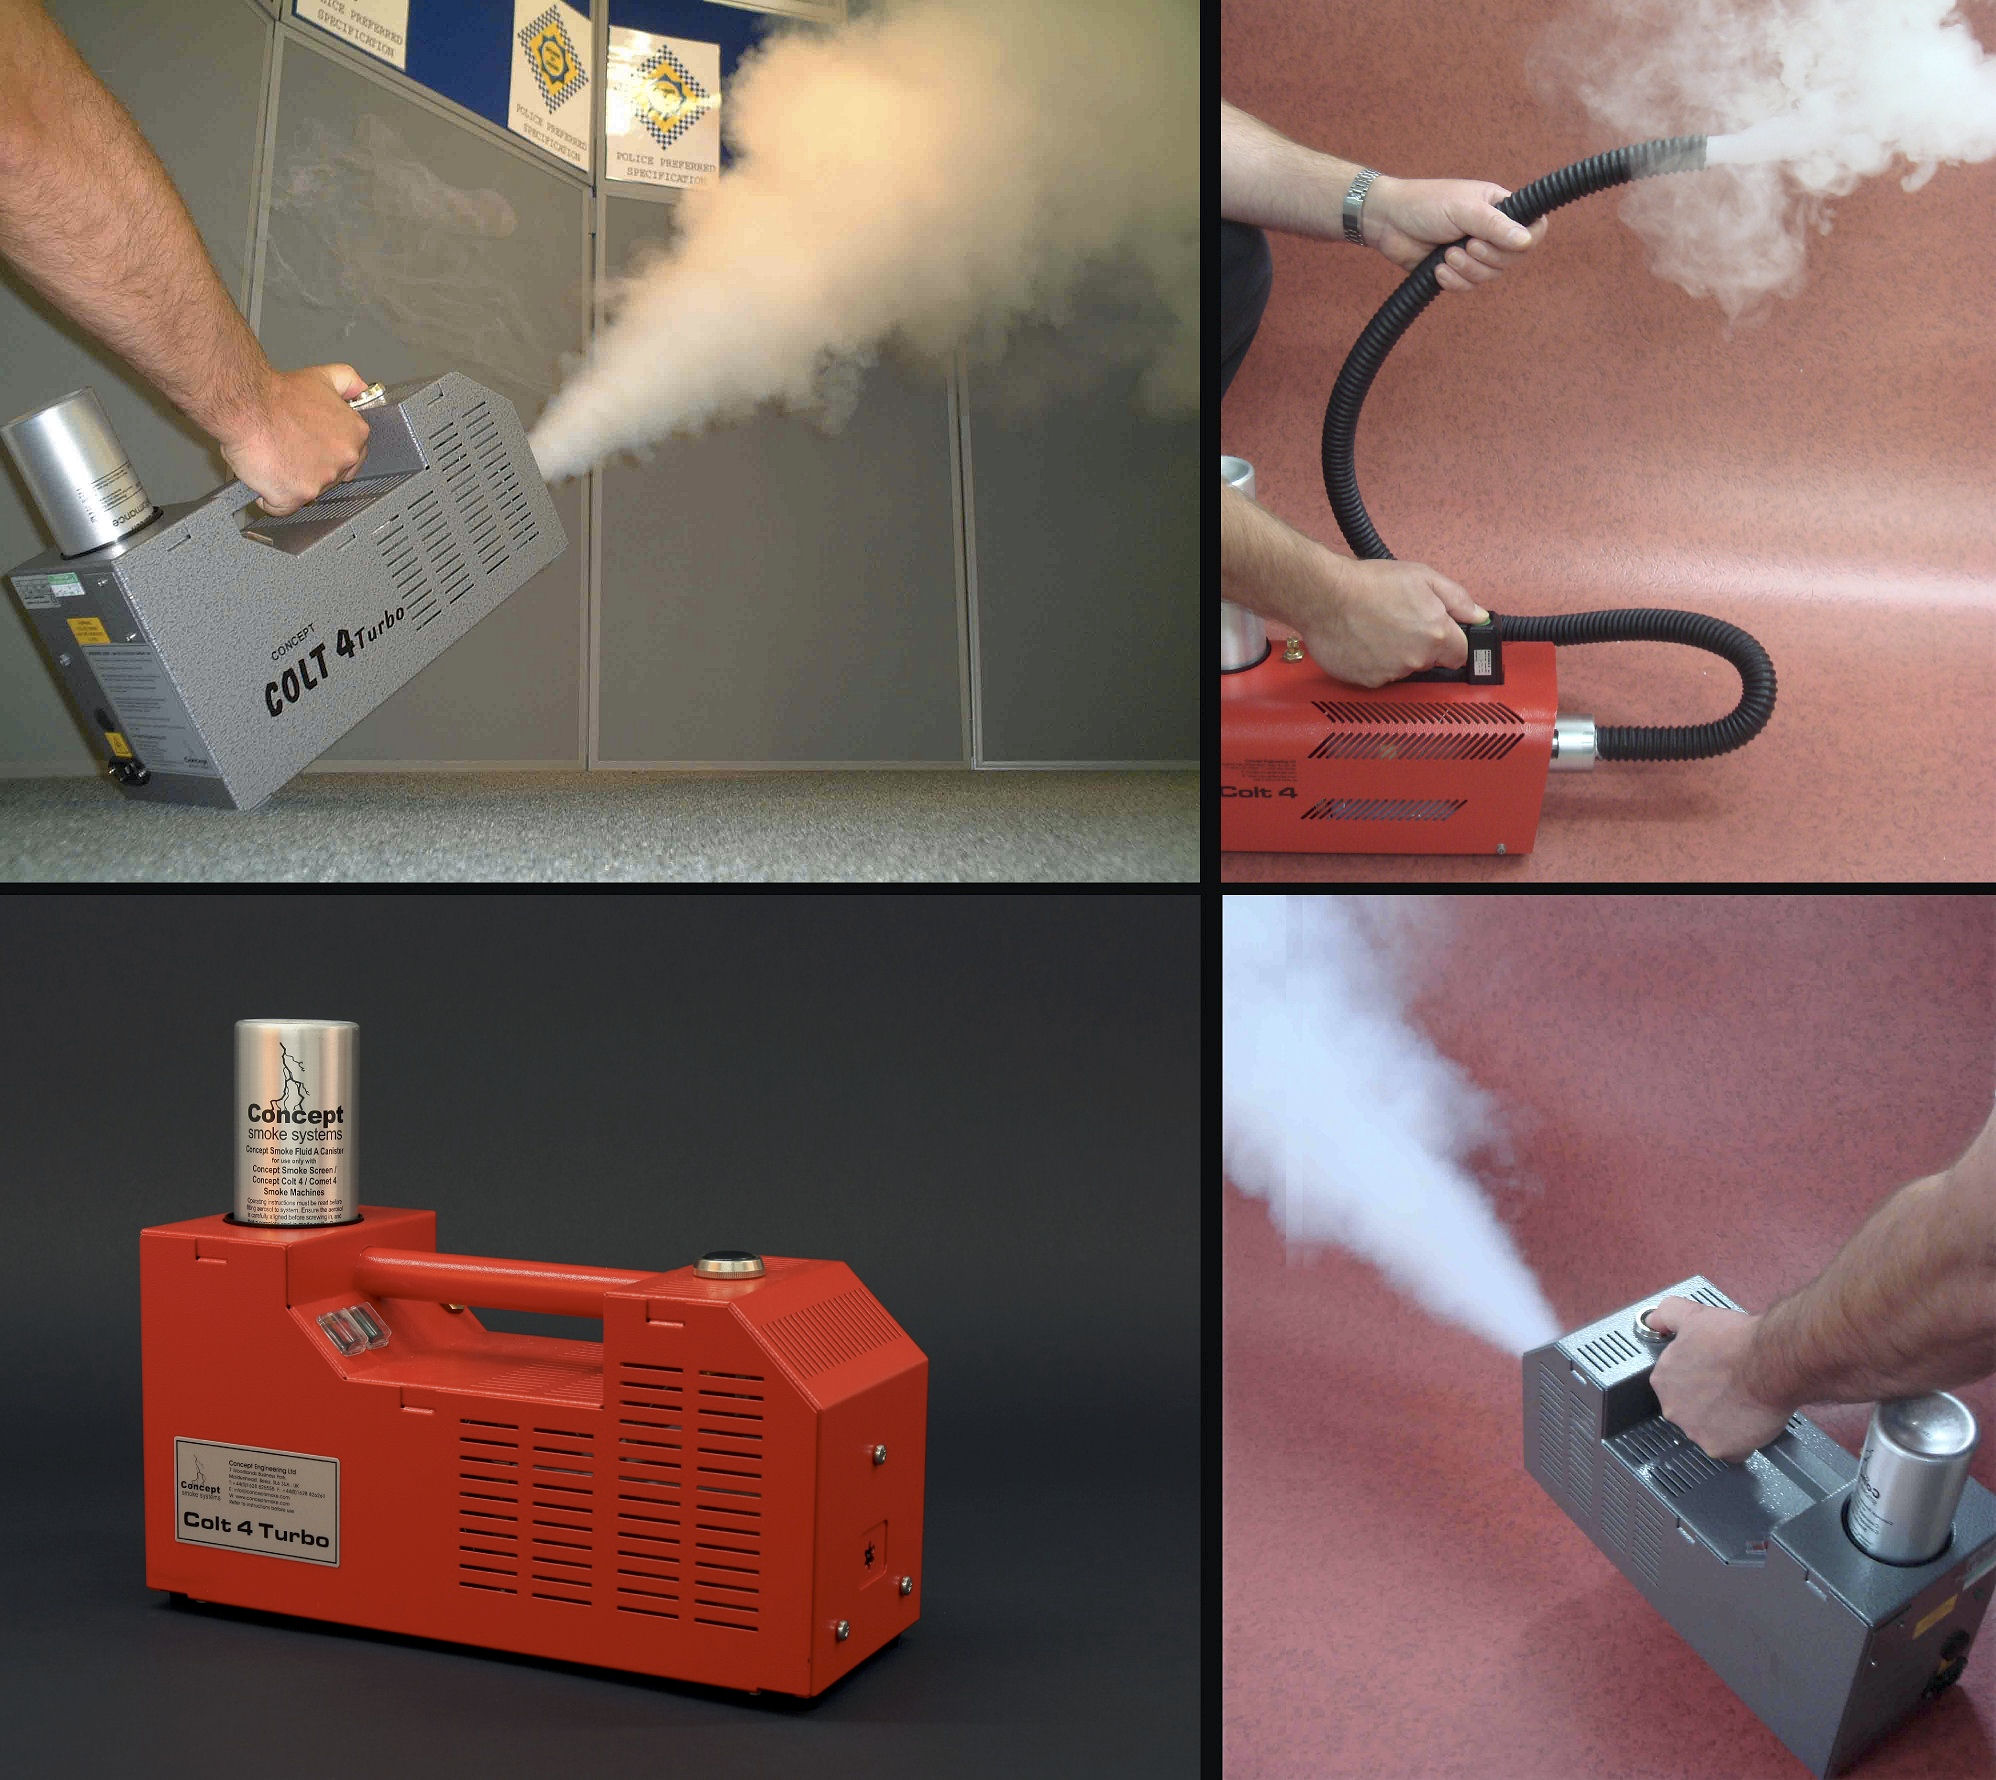 HSE Video of Smoke Clearance Testing – Smoke Dispersal in Spray Room